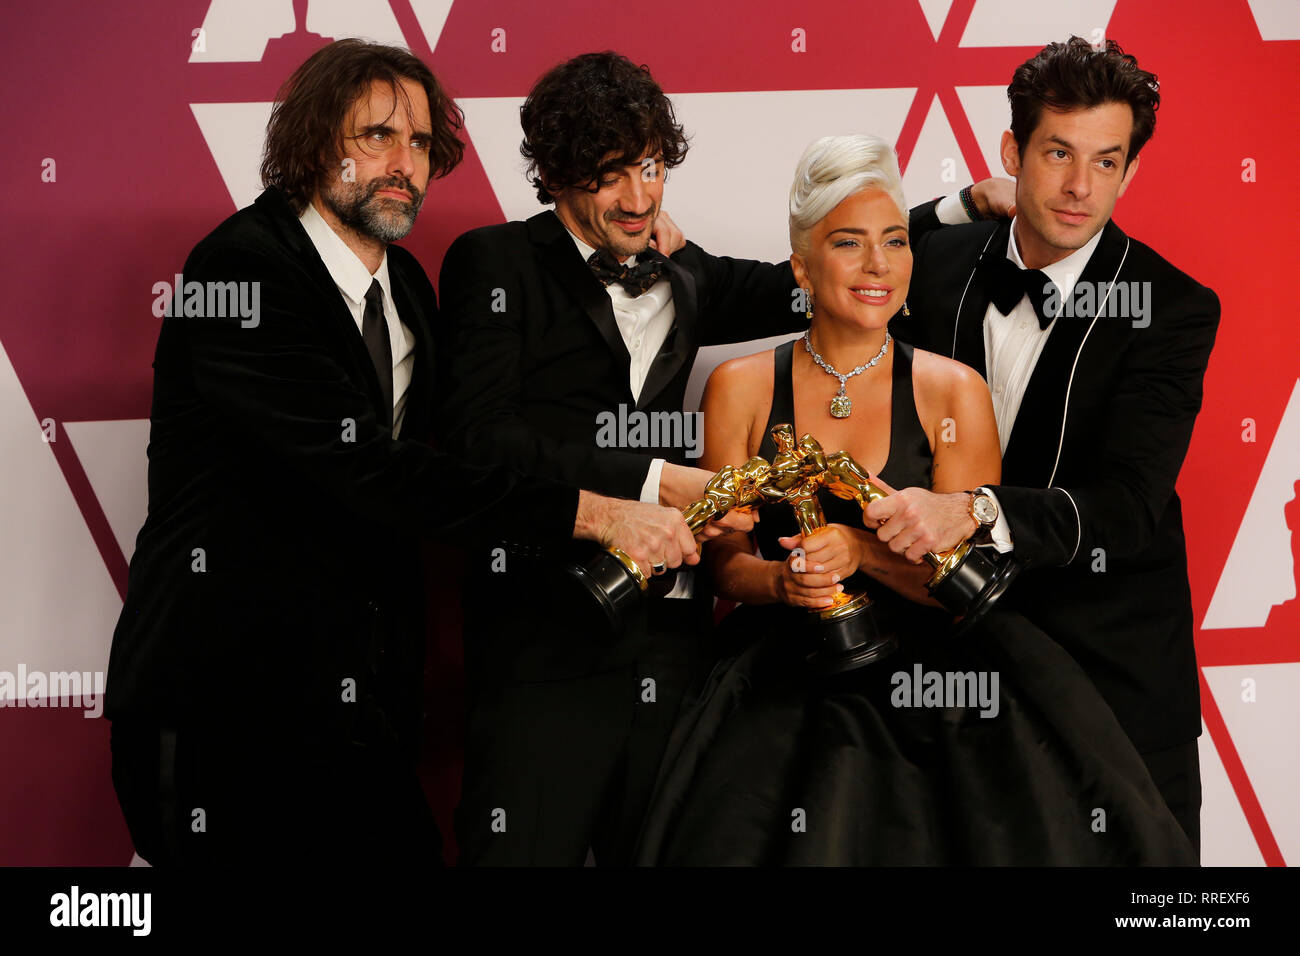 Lady Gaga at the Academy Awards 2019 Stock Photo